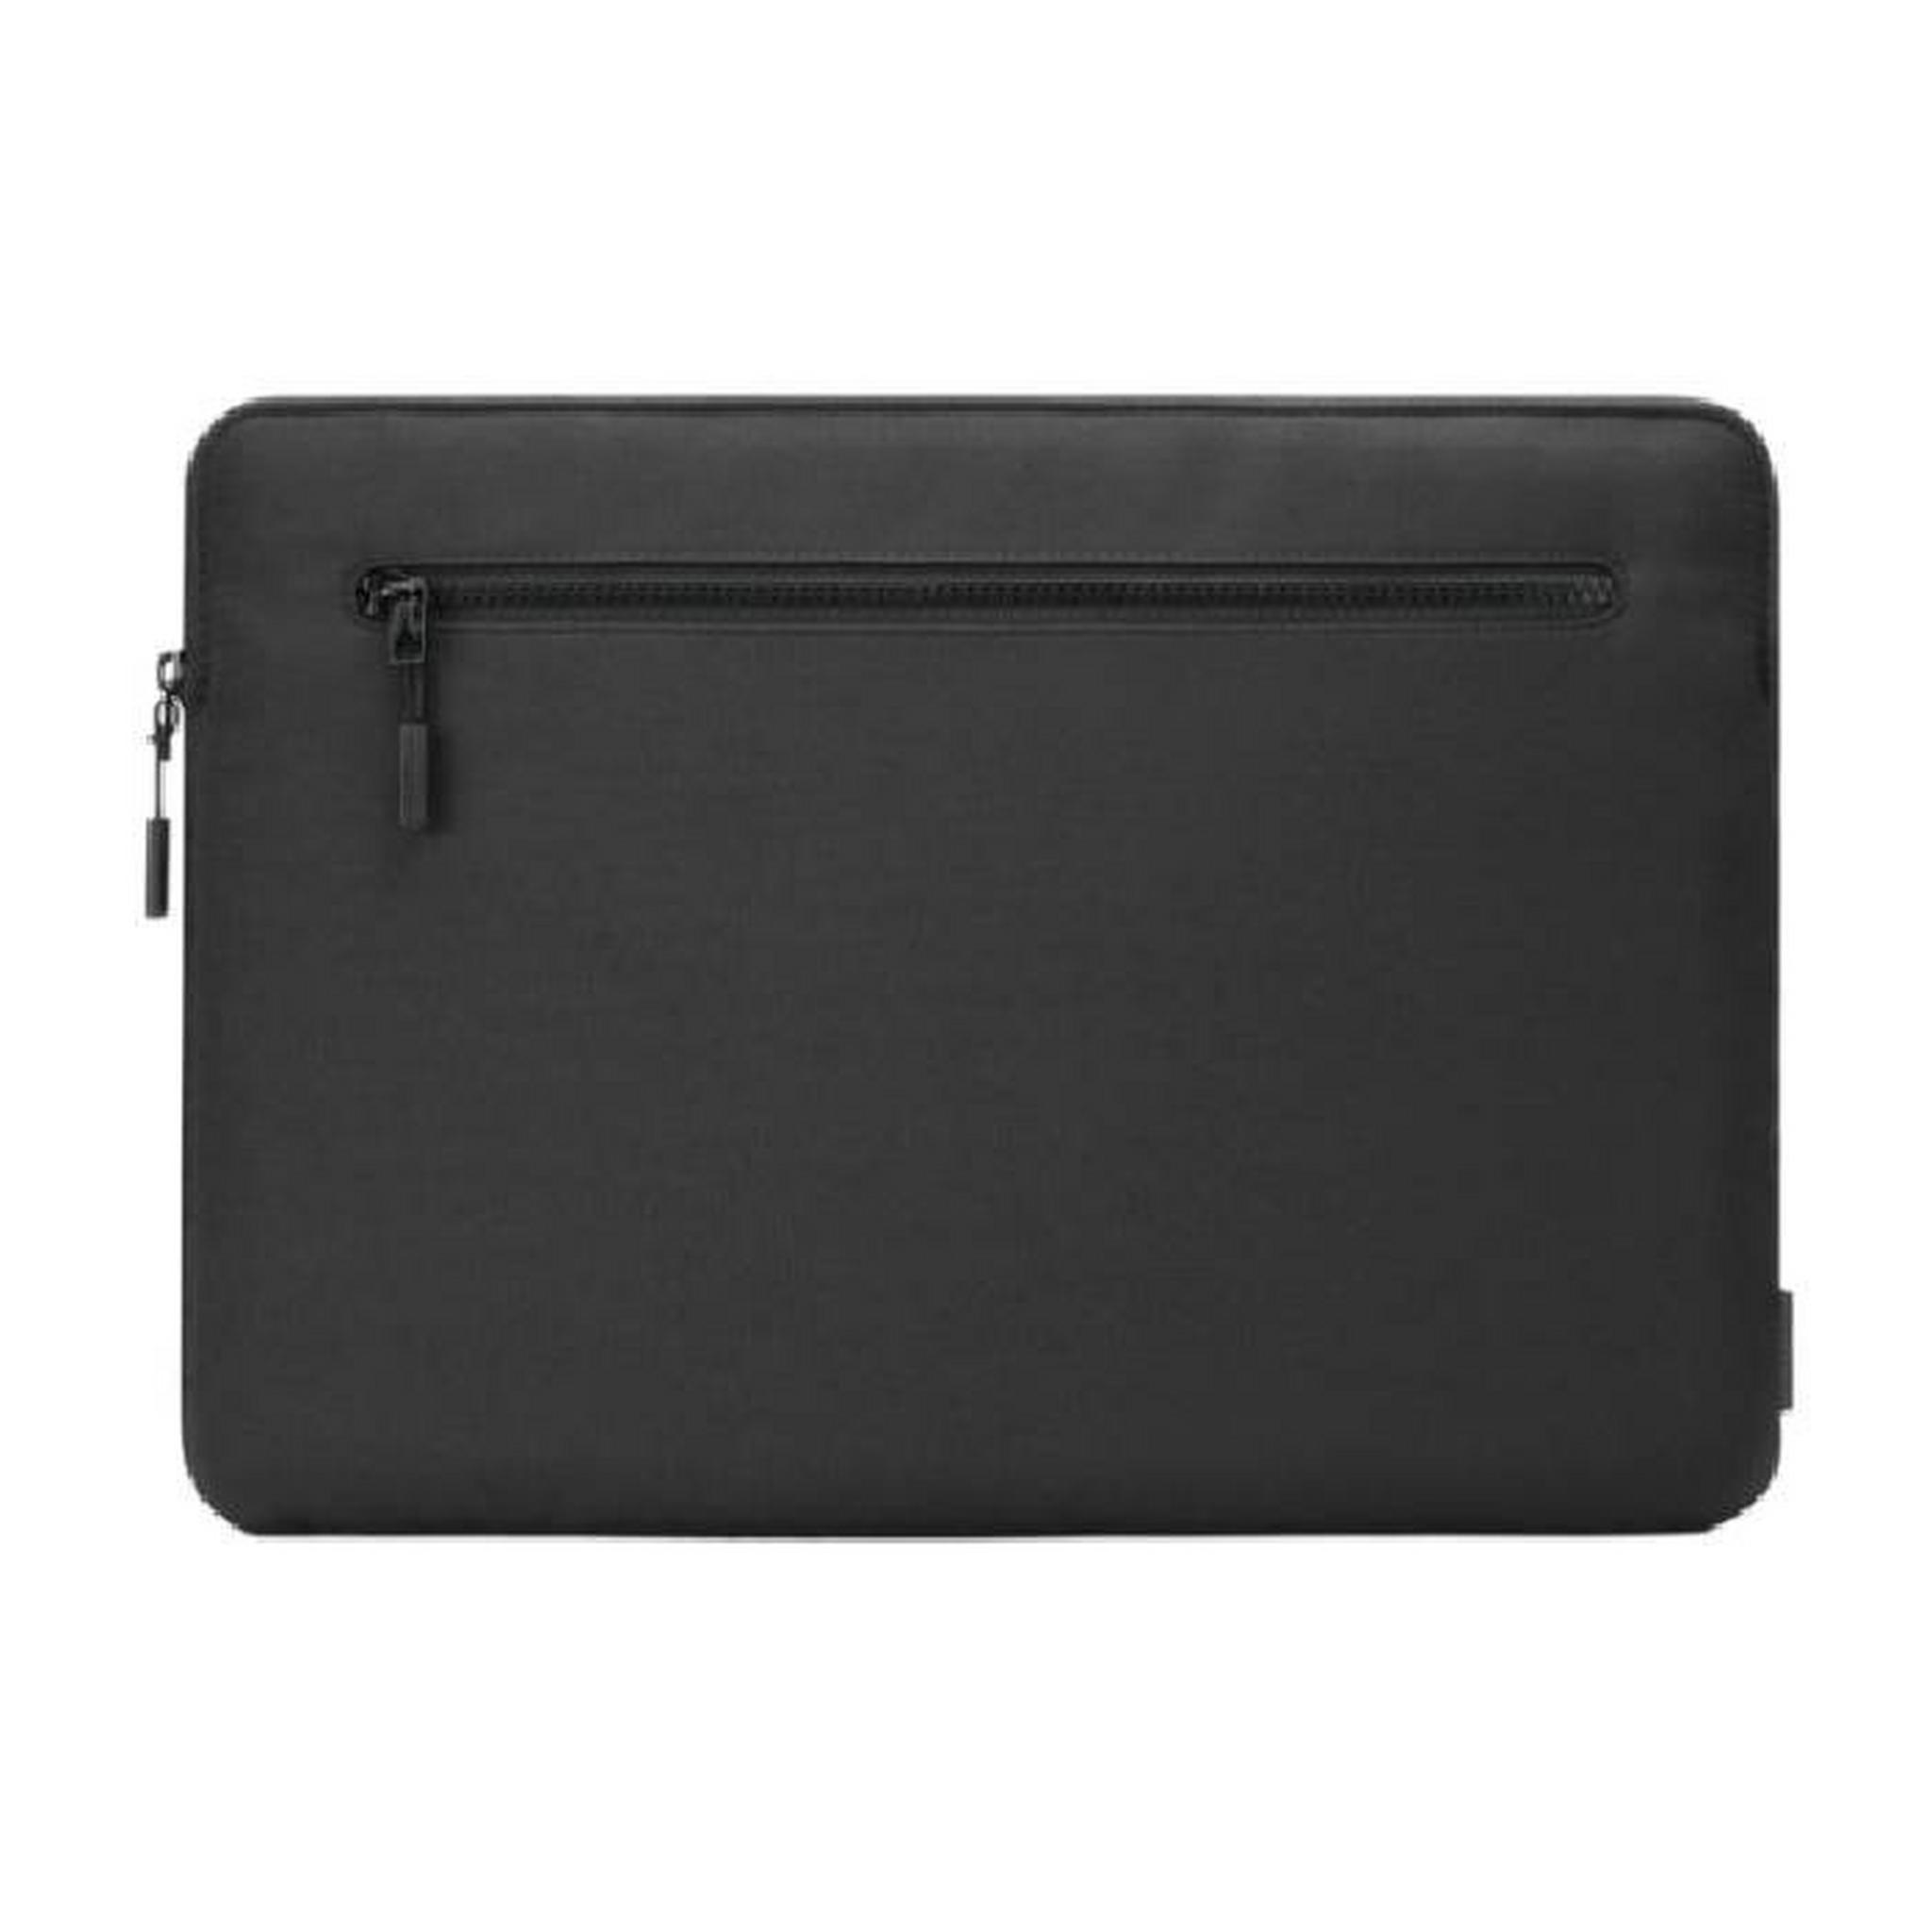 Pipetto 13-Inch MacBook Sleeve Organizer  - Black